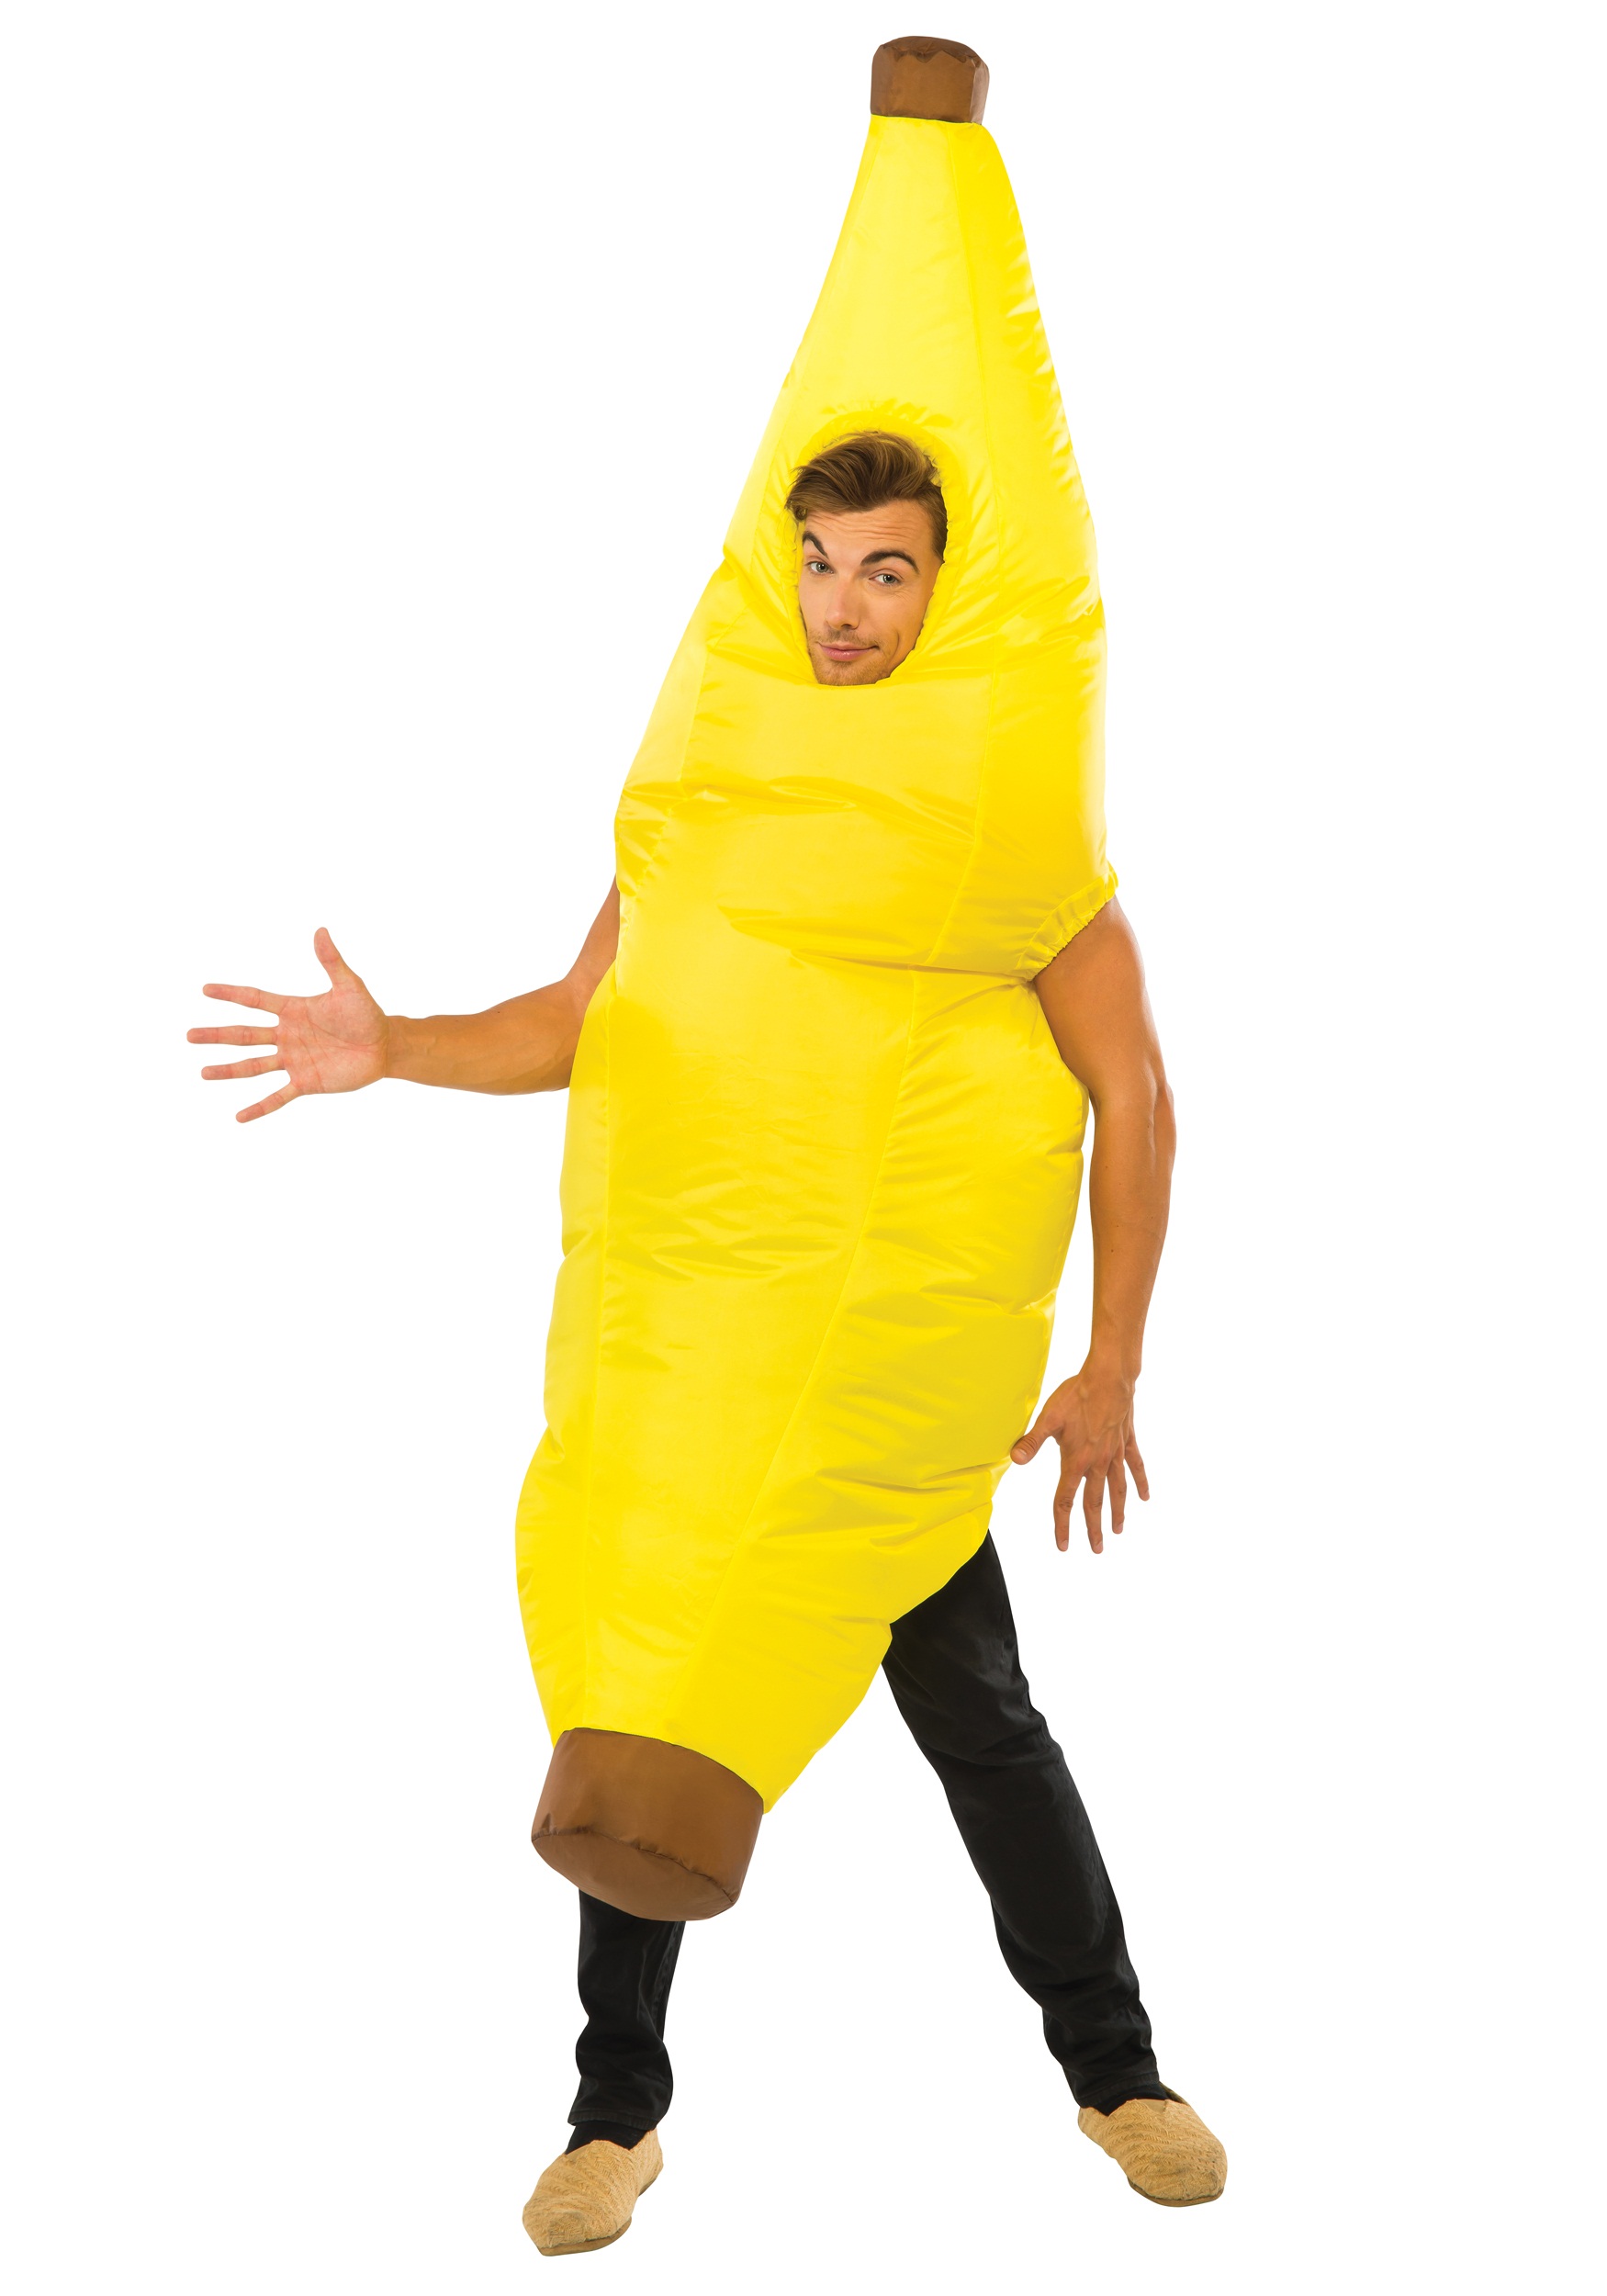 Image of Inflatable Banana Adult Costume ID RU810500-ST